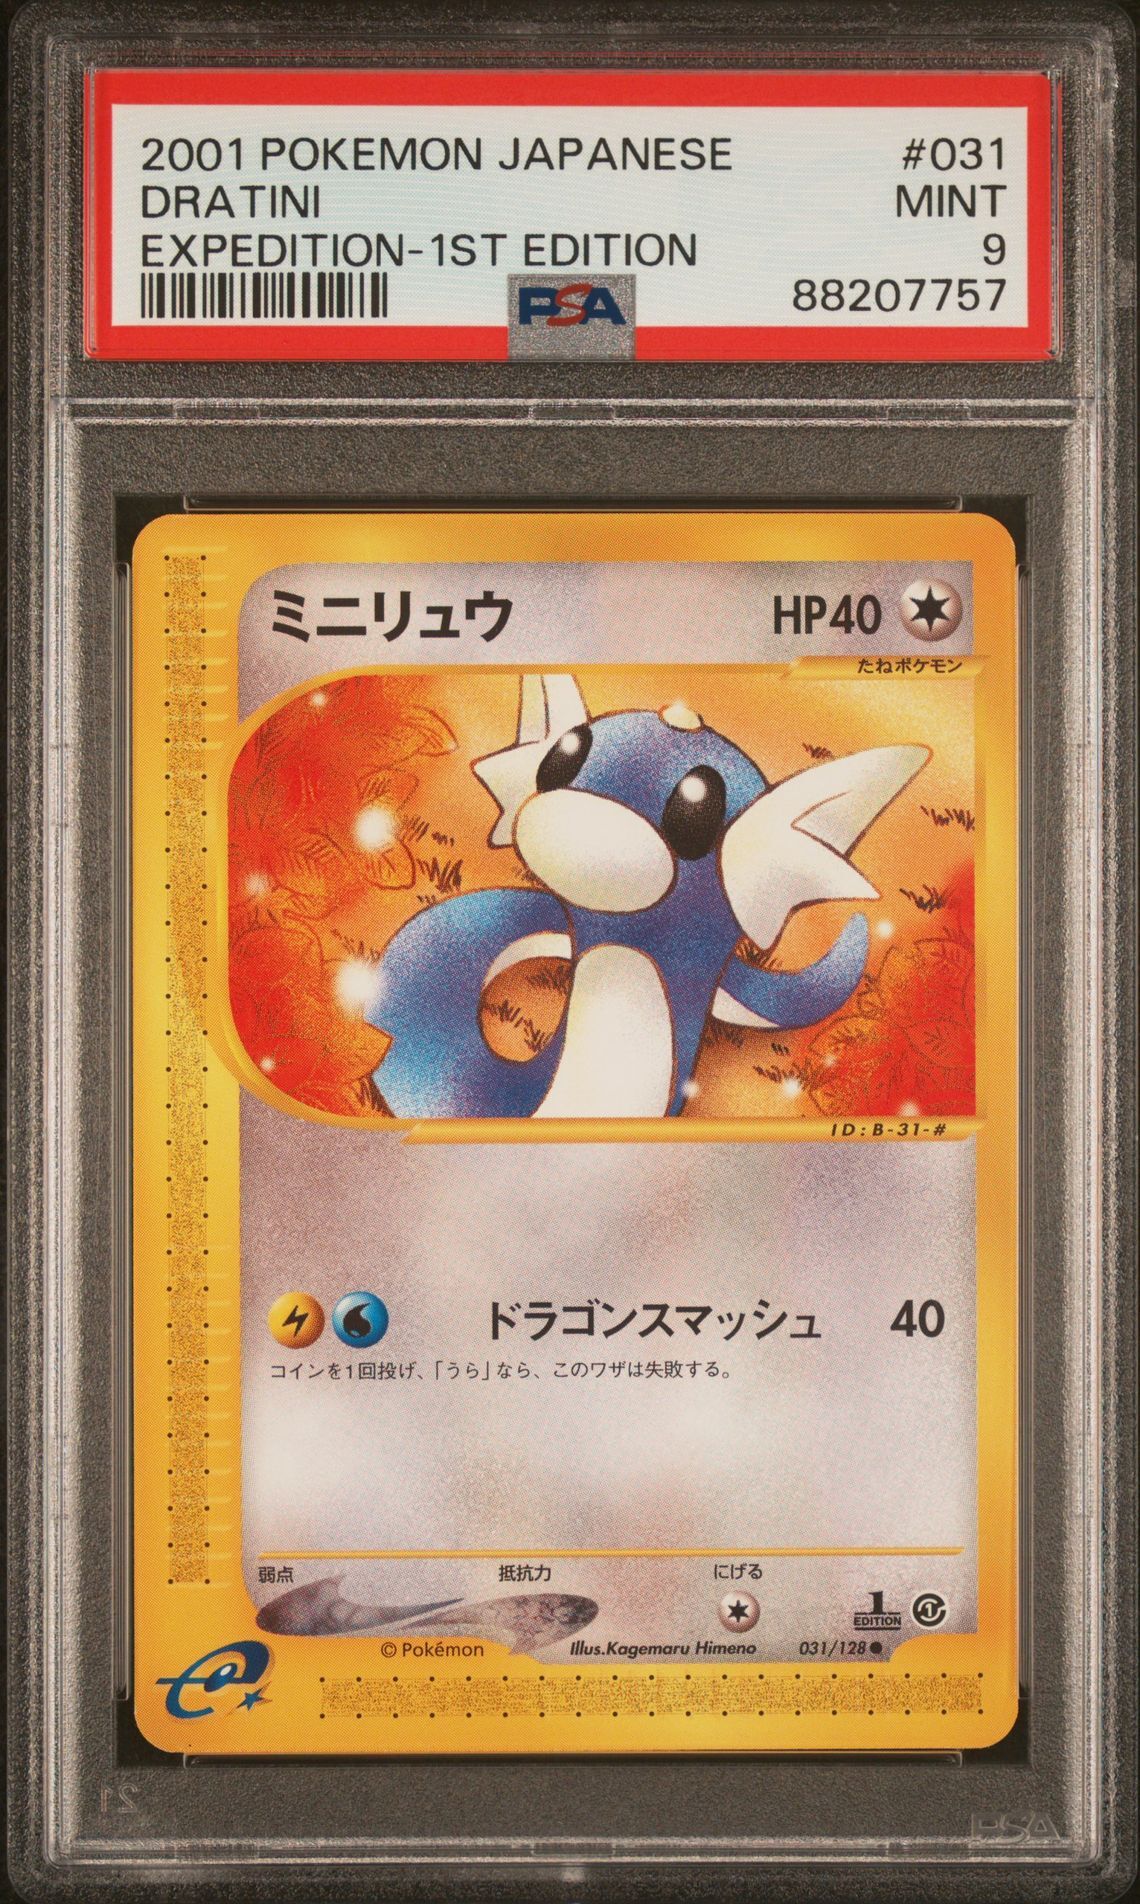 2001 POKEMON JAPANESE EXPEDITION 031 DRATINI 1ST EDITION - PSA 9 MINT - Pokémon